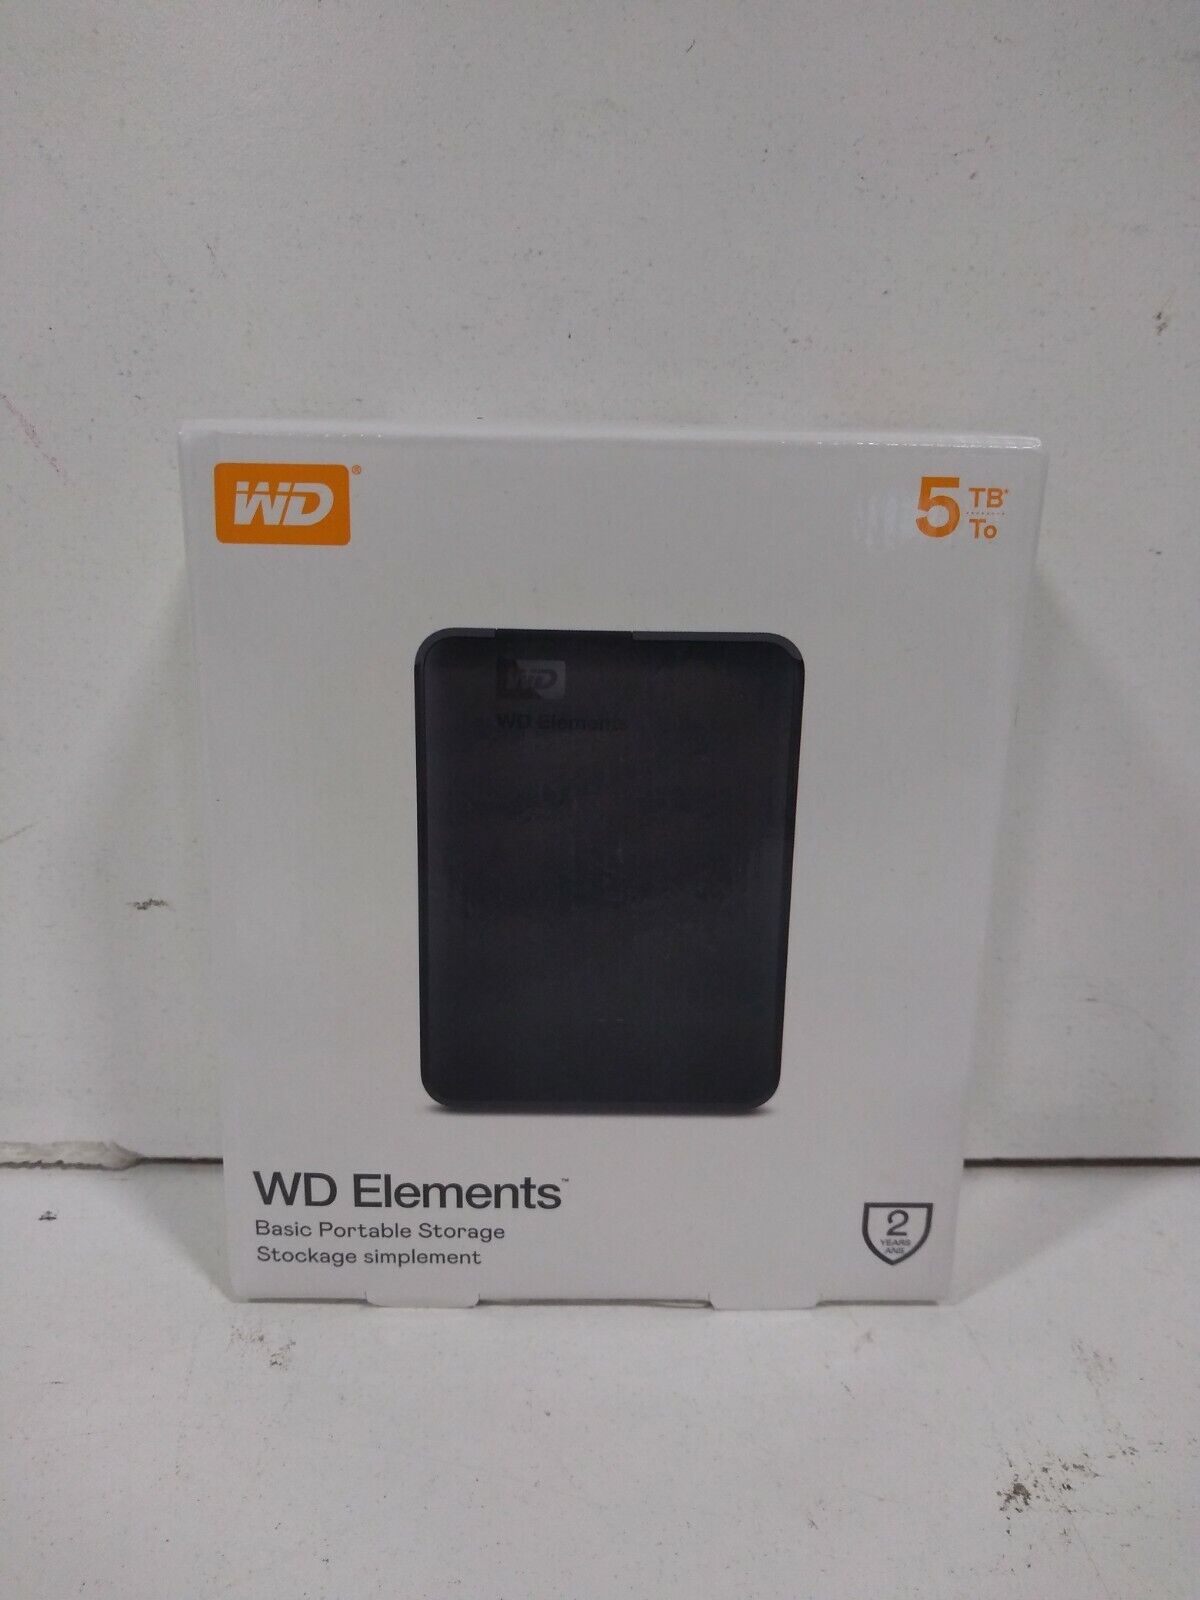 WD Elements Basic Portable Hard Drive Storage 5 TB W/ USB Cable